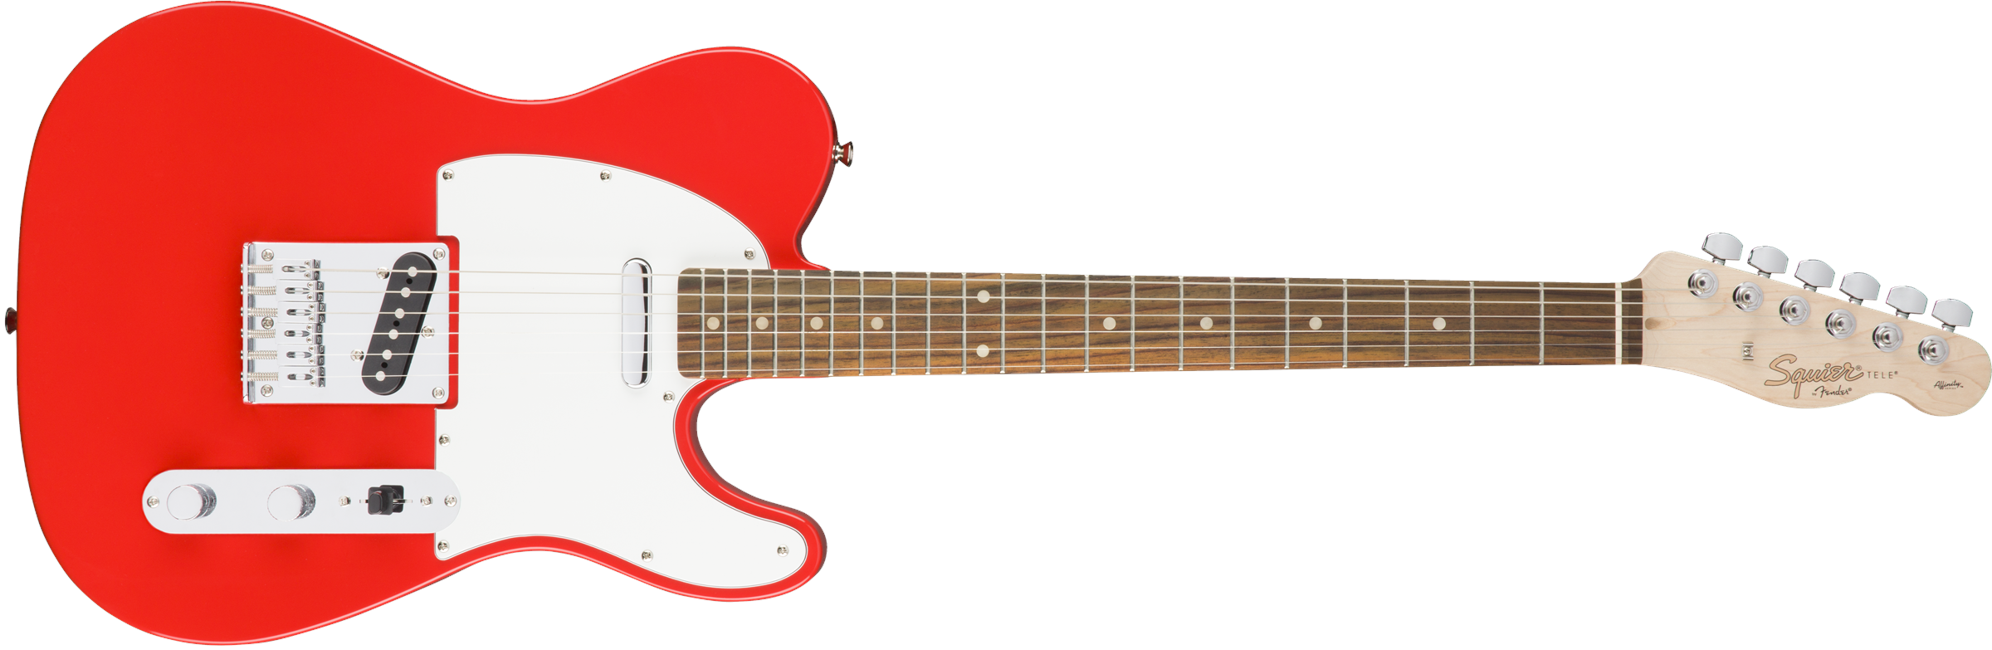 Squier By Fender - Affinity Telecaster - Elektrisk Guitar (Race Red)